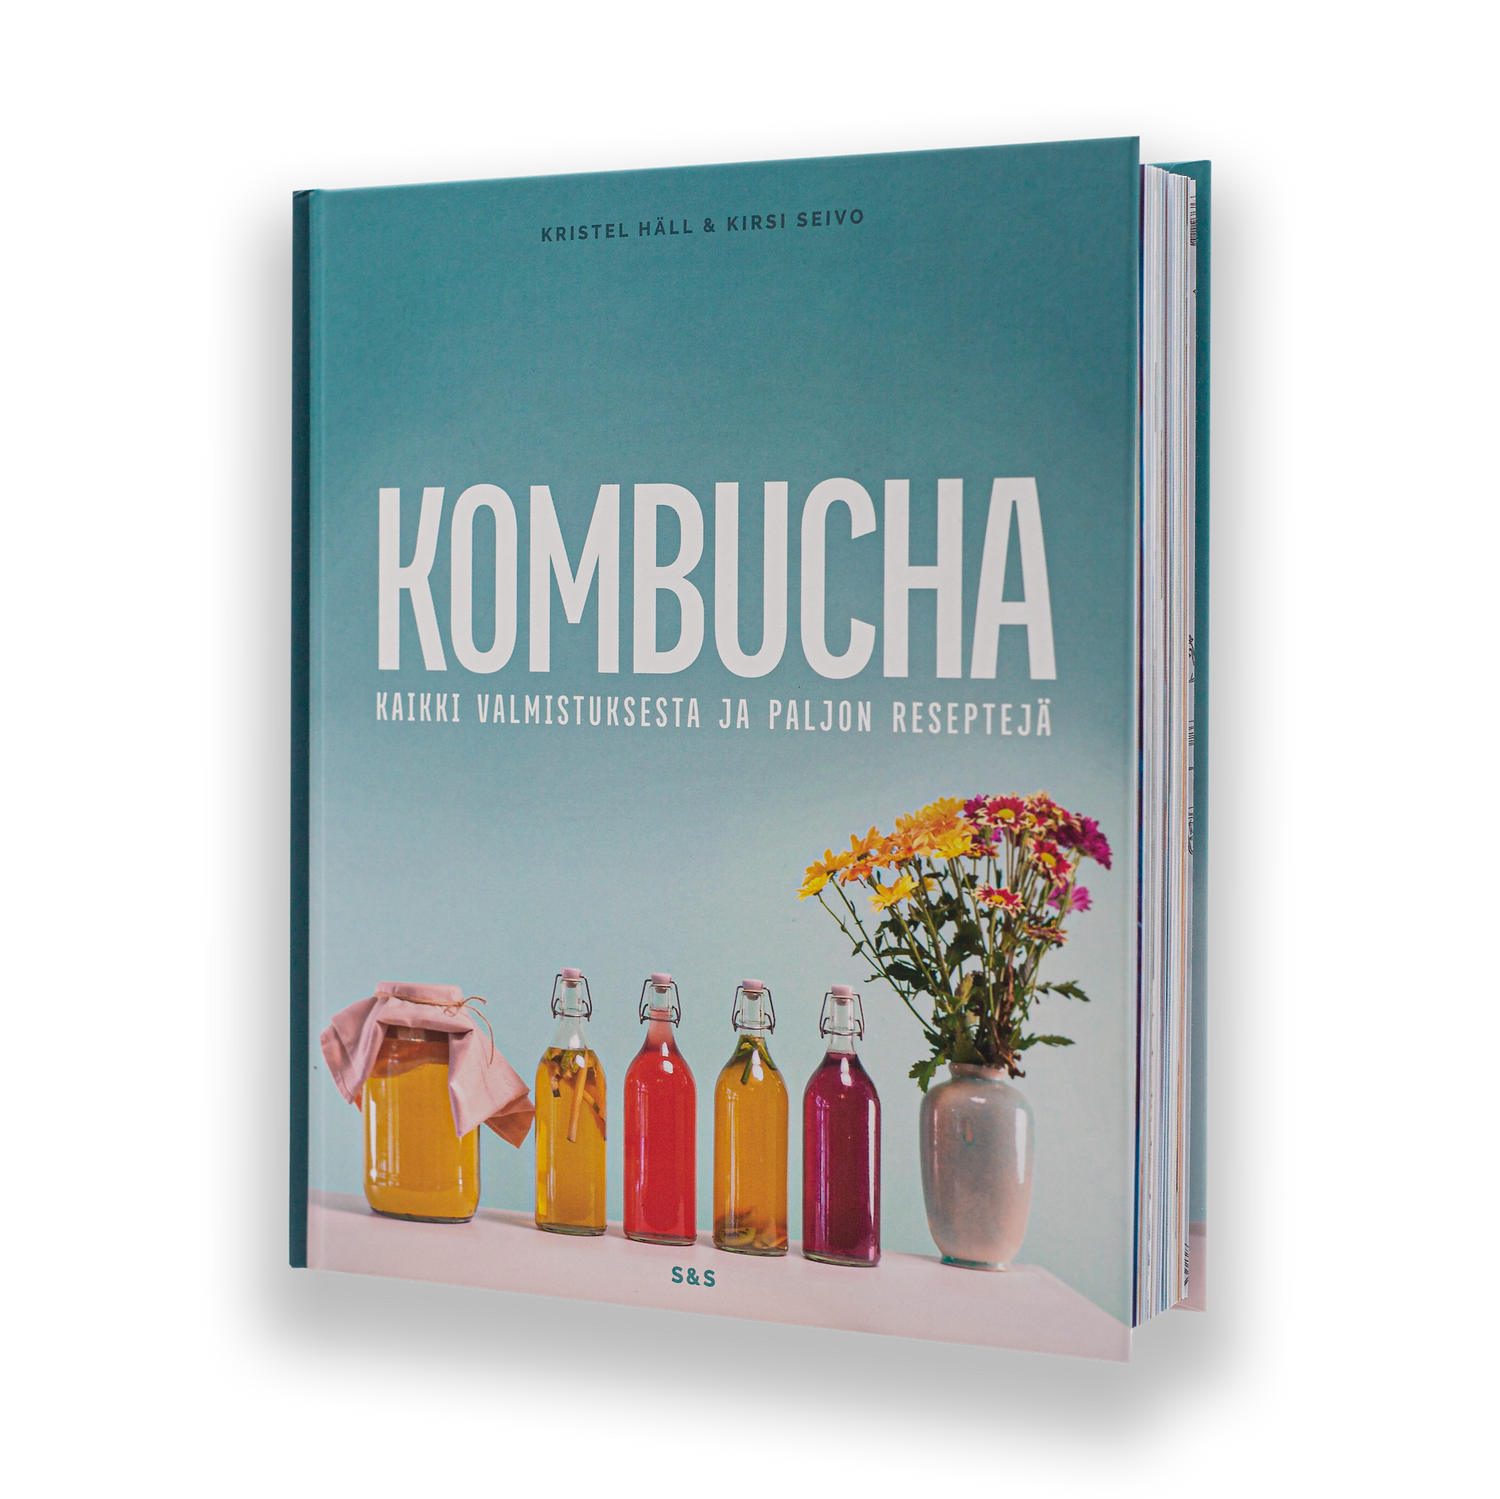 Kombucha - How to make it and lots of recipes